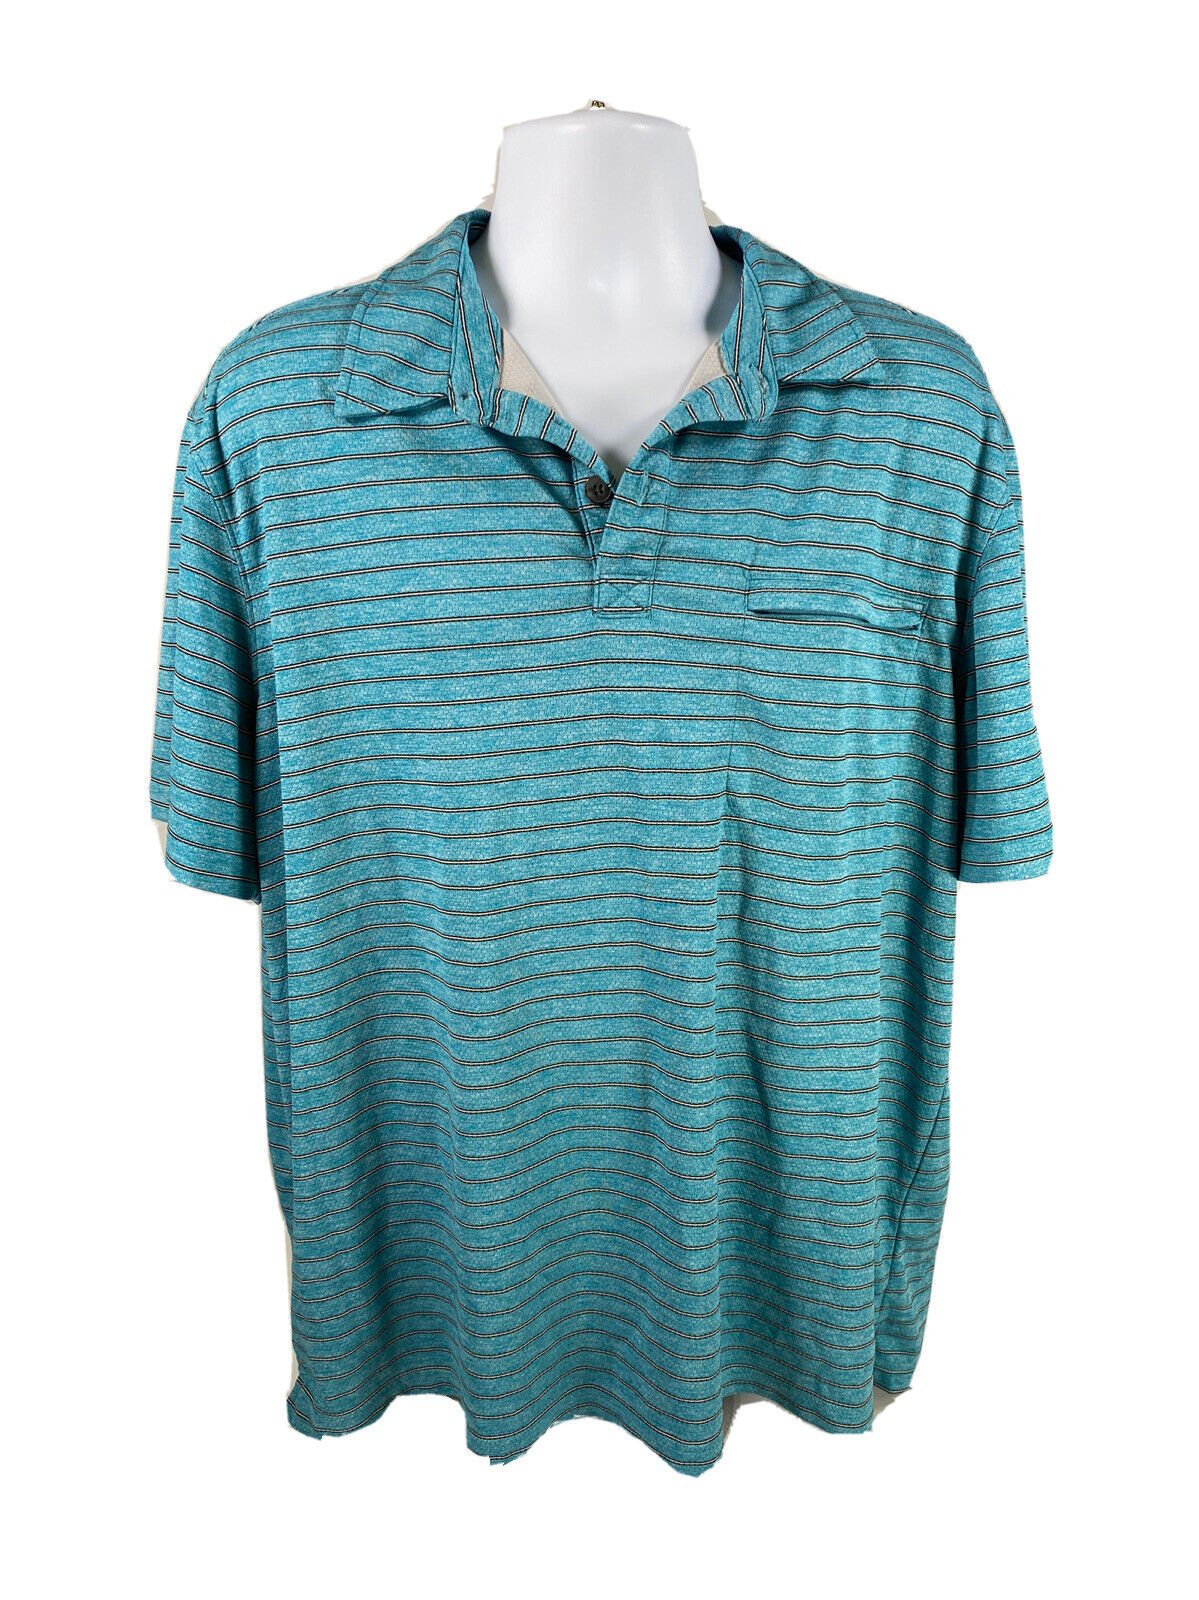 Duluth Trading Co Men's Blue Striped Polyester/Nylon Polo Shirt - XL